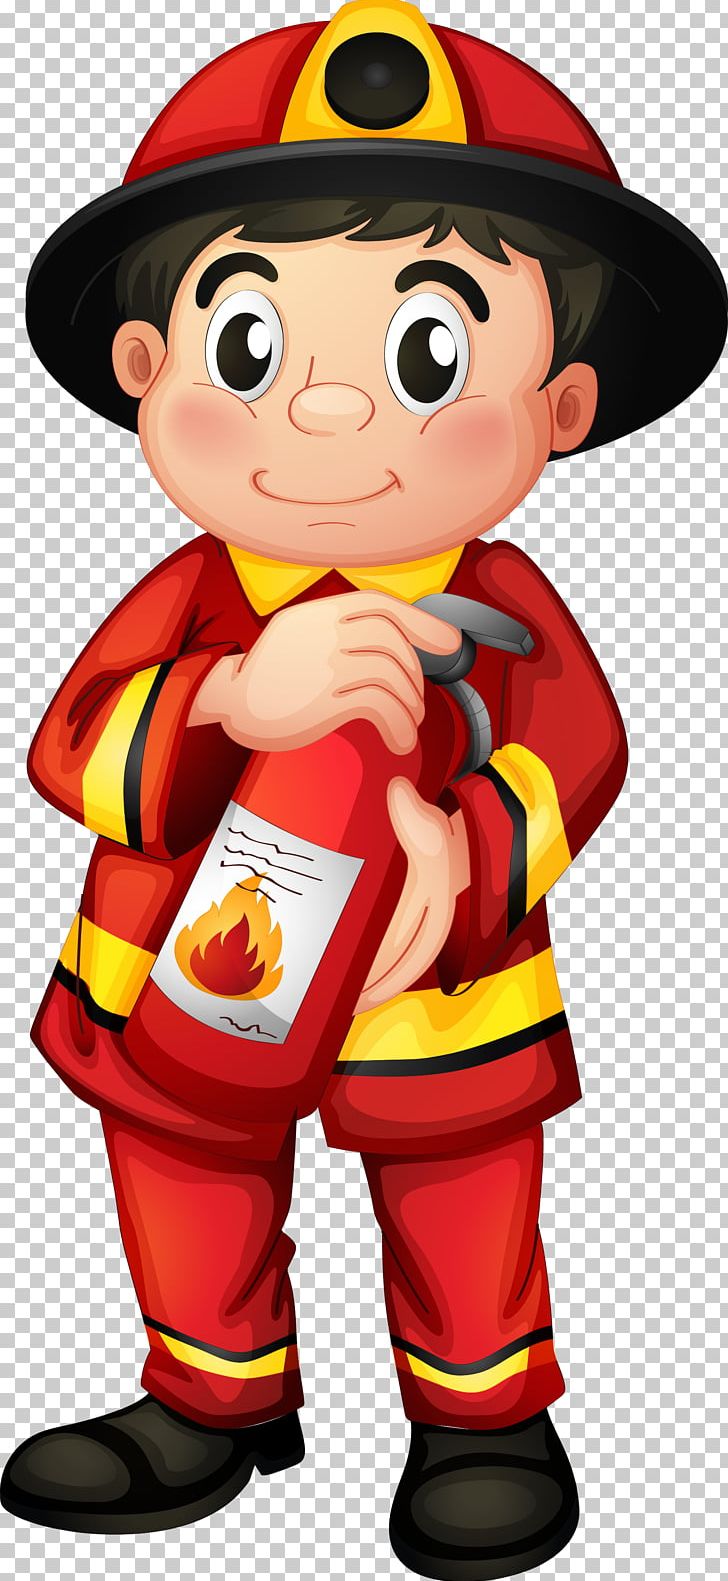 Fire Department Fire Station Firefighter Fire Engine PNG, Clipart, Art, Boy, Cartoon, Clip Art, Fictional Character Free PNG Download